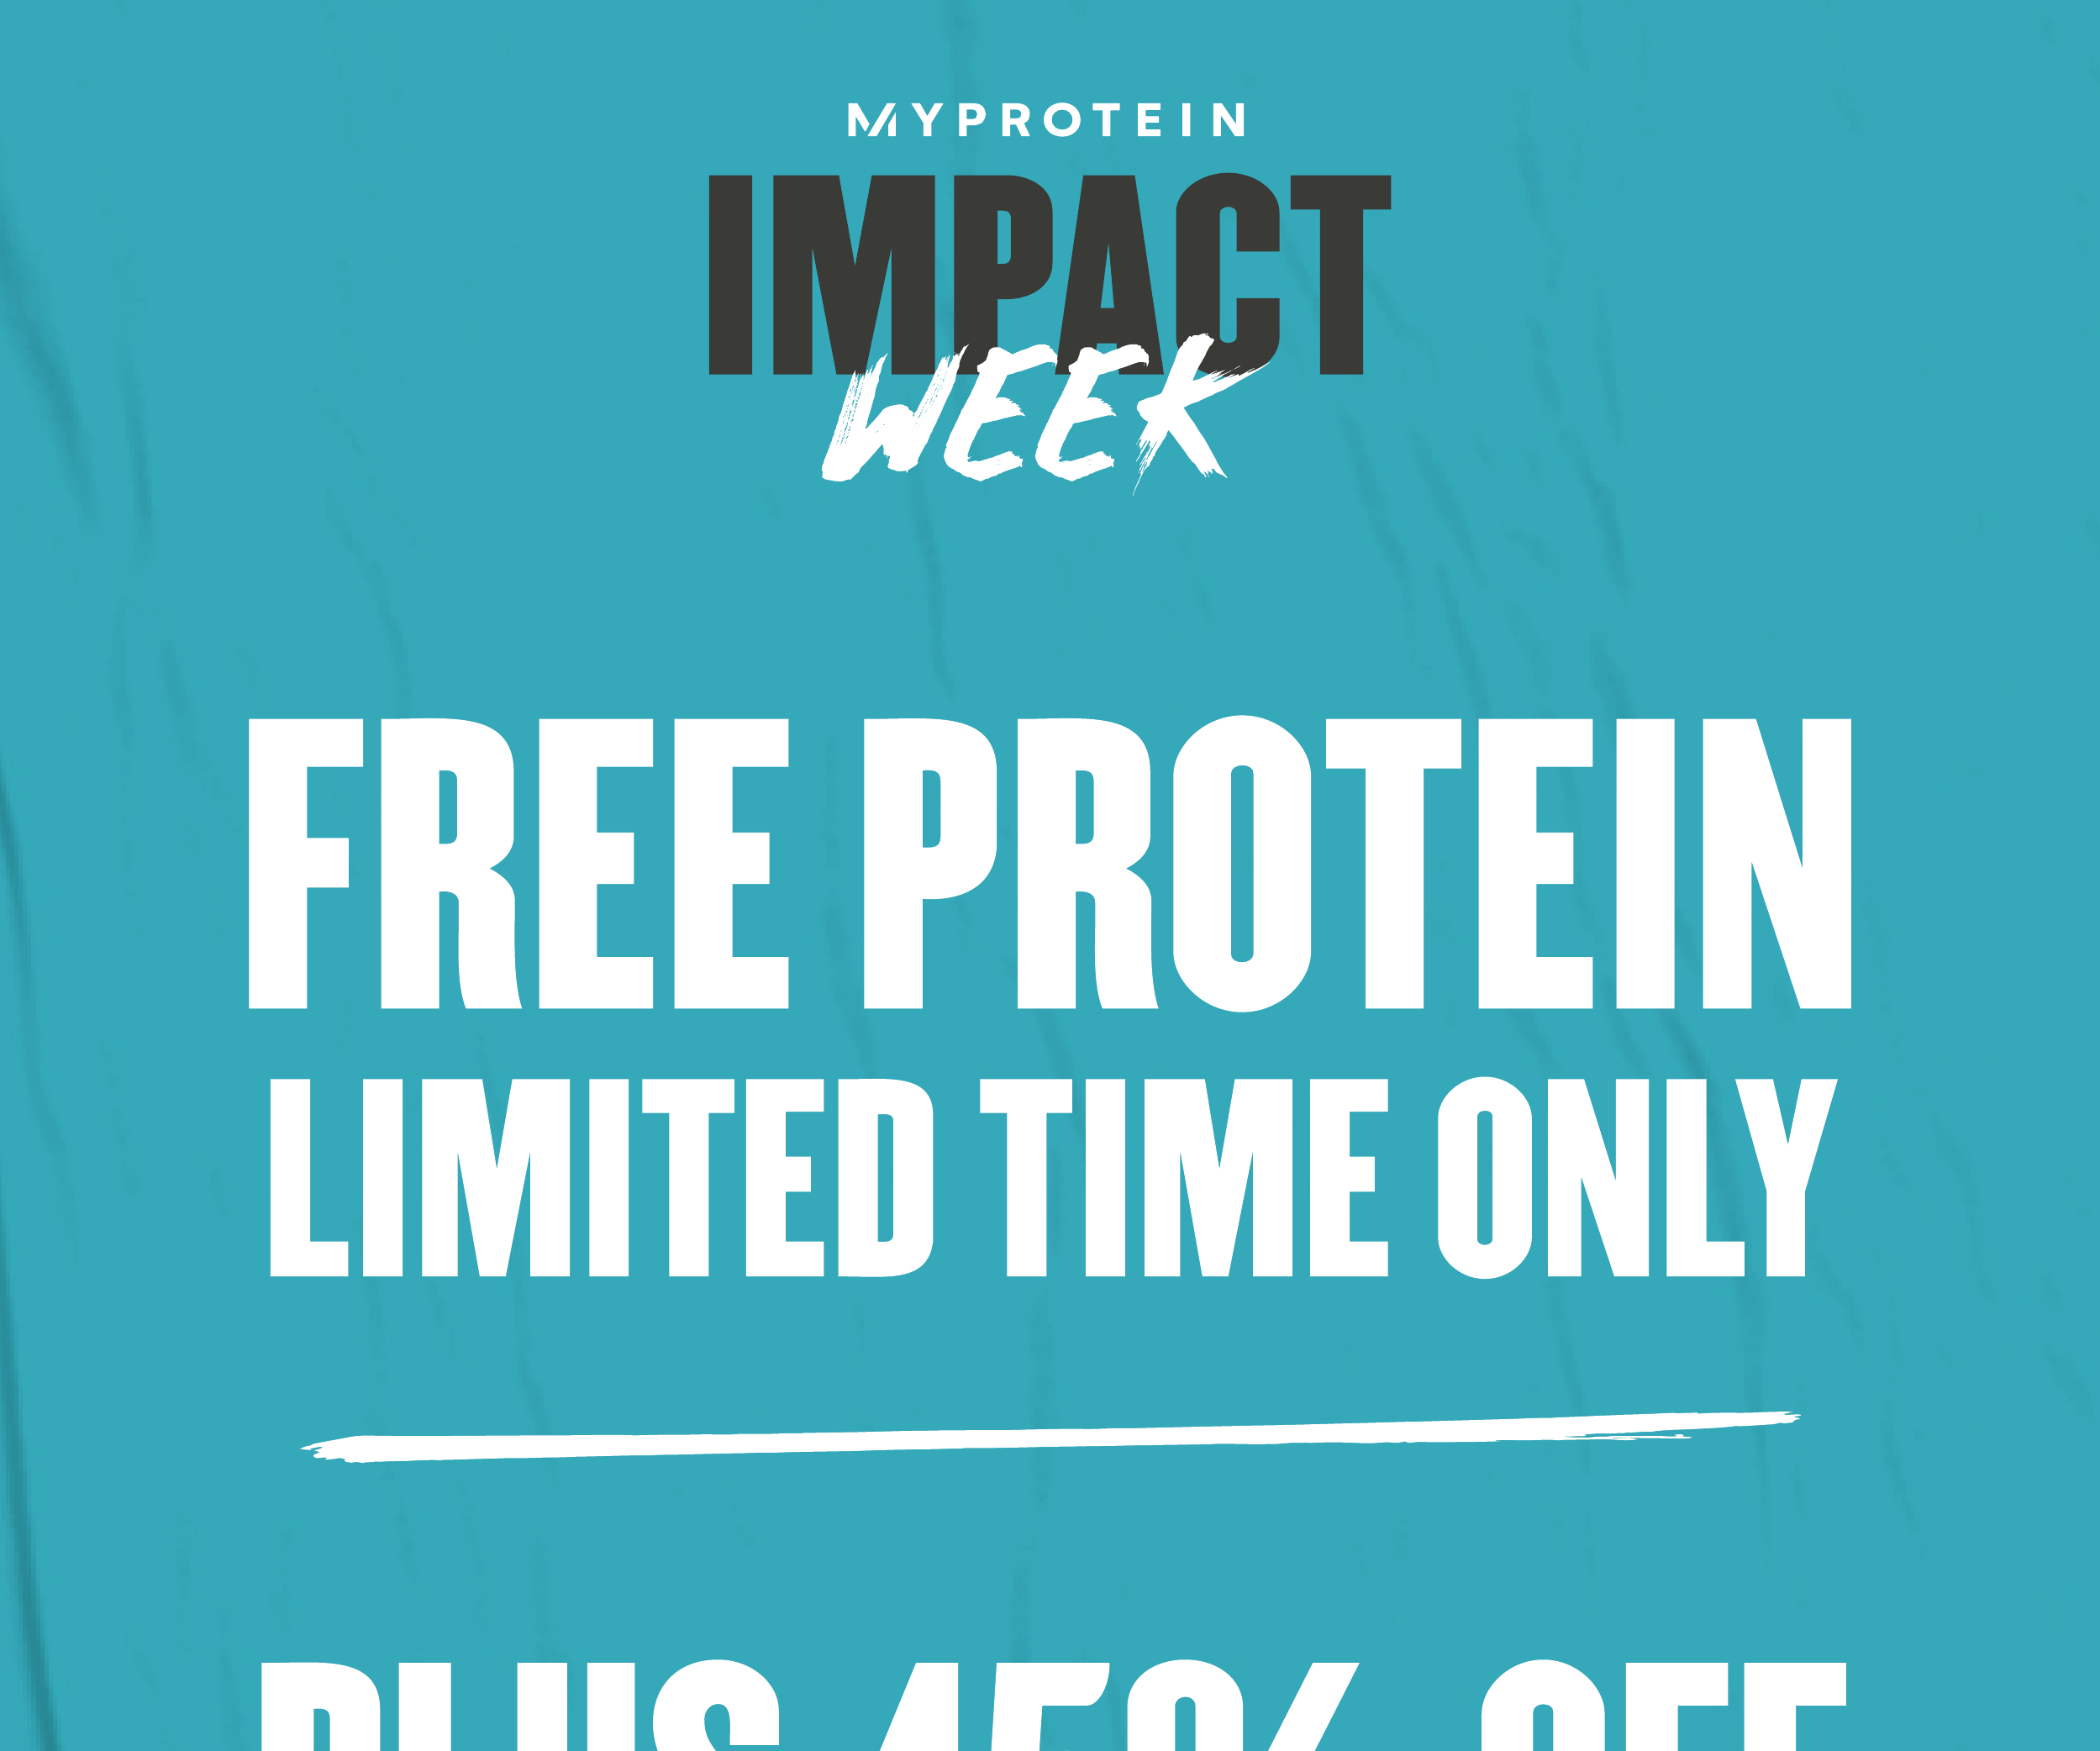 FREE Protein